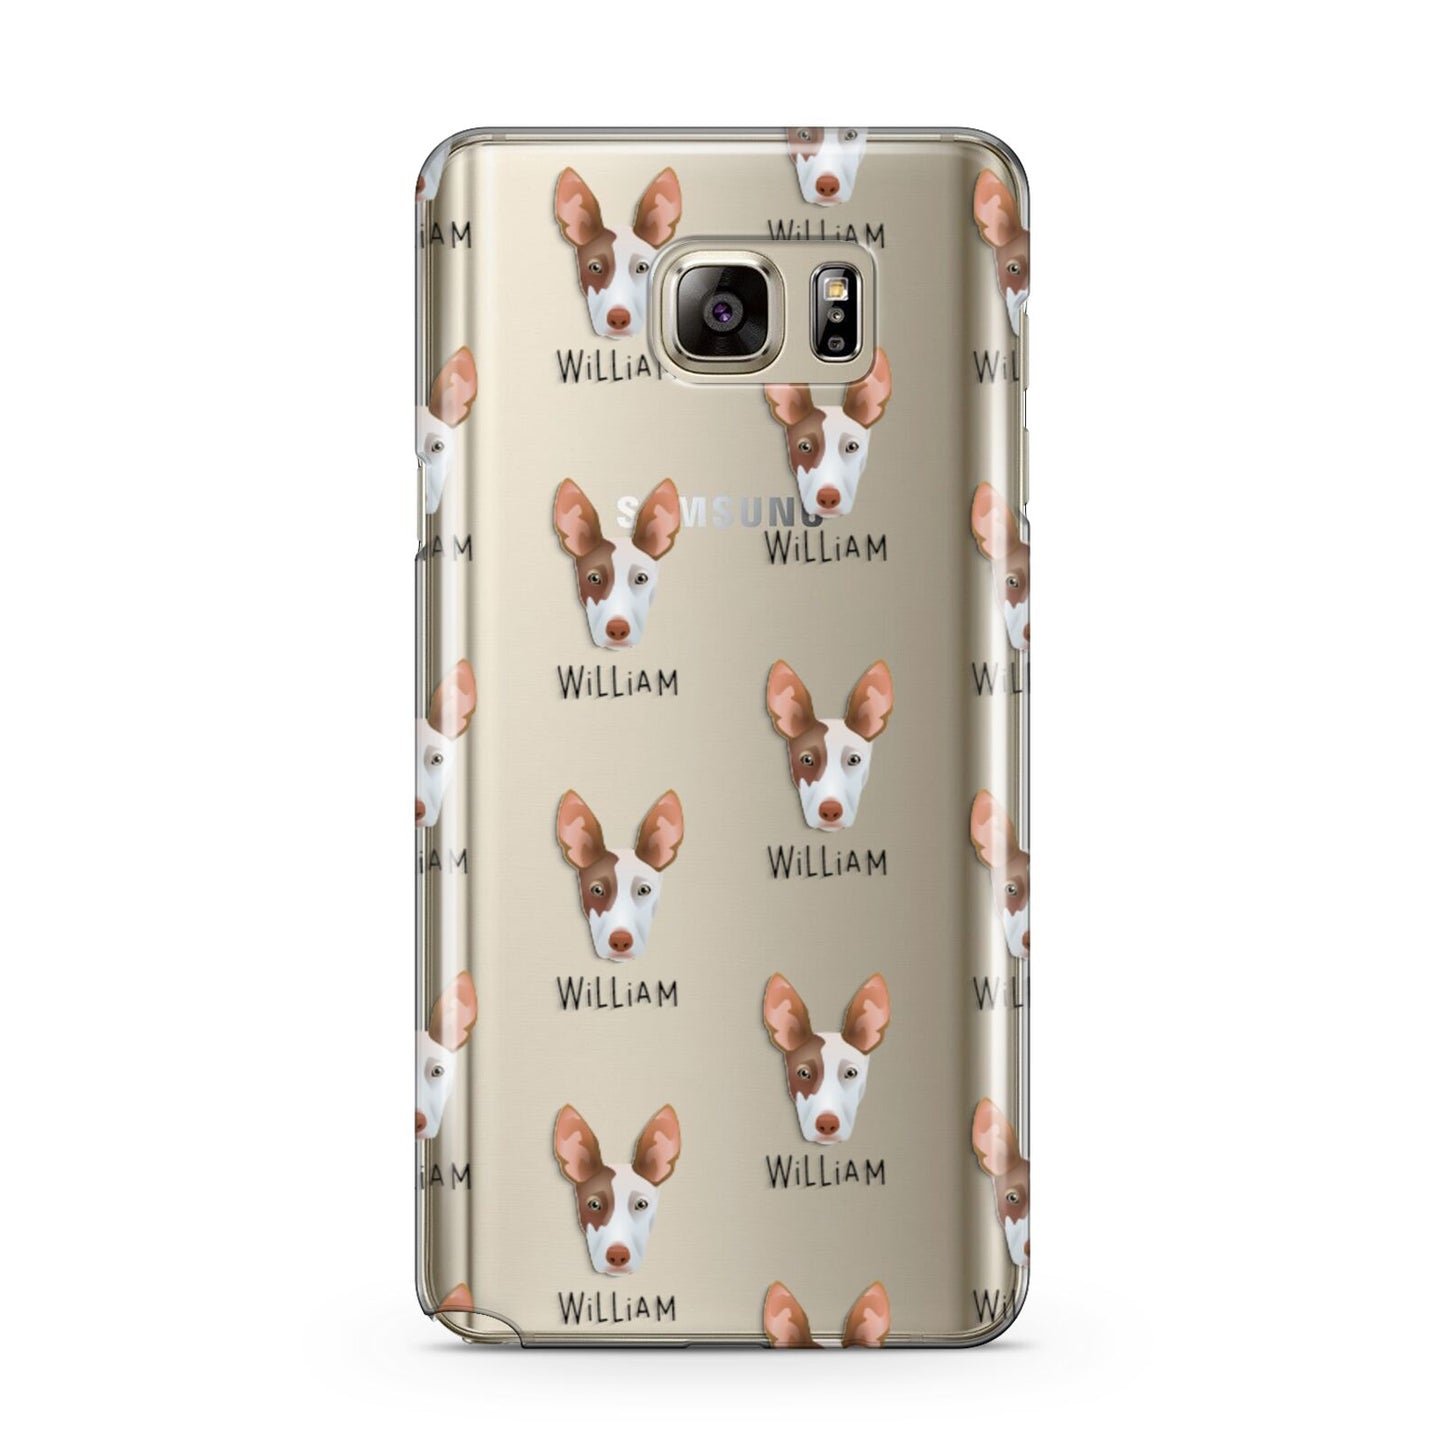 Ibizan Hound Icon with Name Samsung Galaxy Note 5 Case